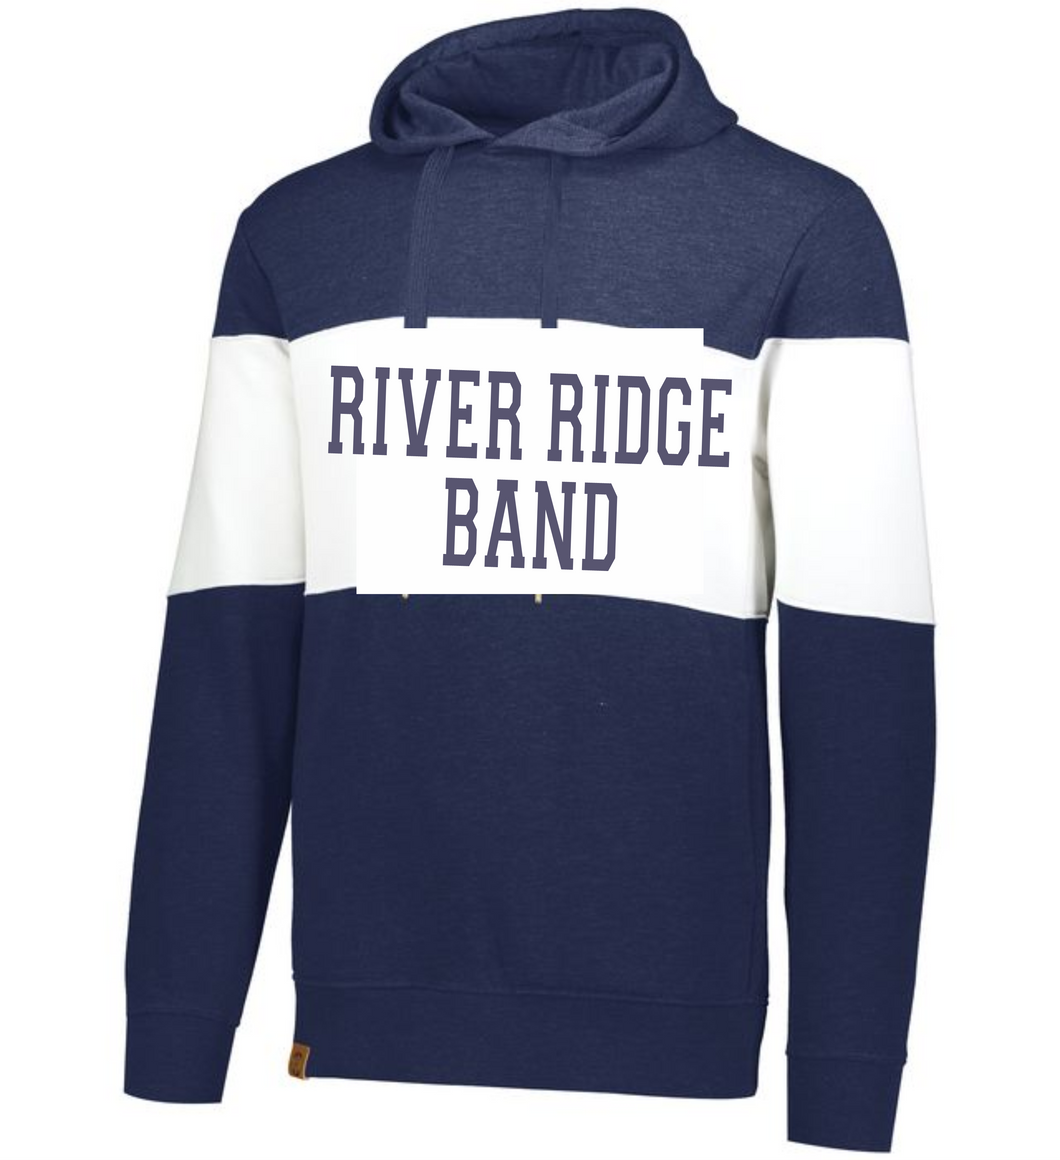 RR-BND-299-10 - Holloway IVY LEAGUE HOODIE - River Ridge Band Logo